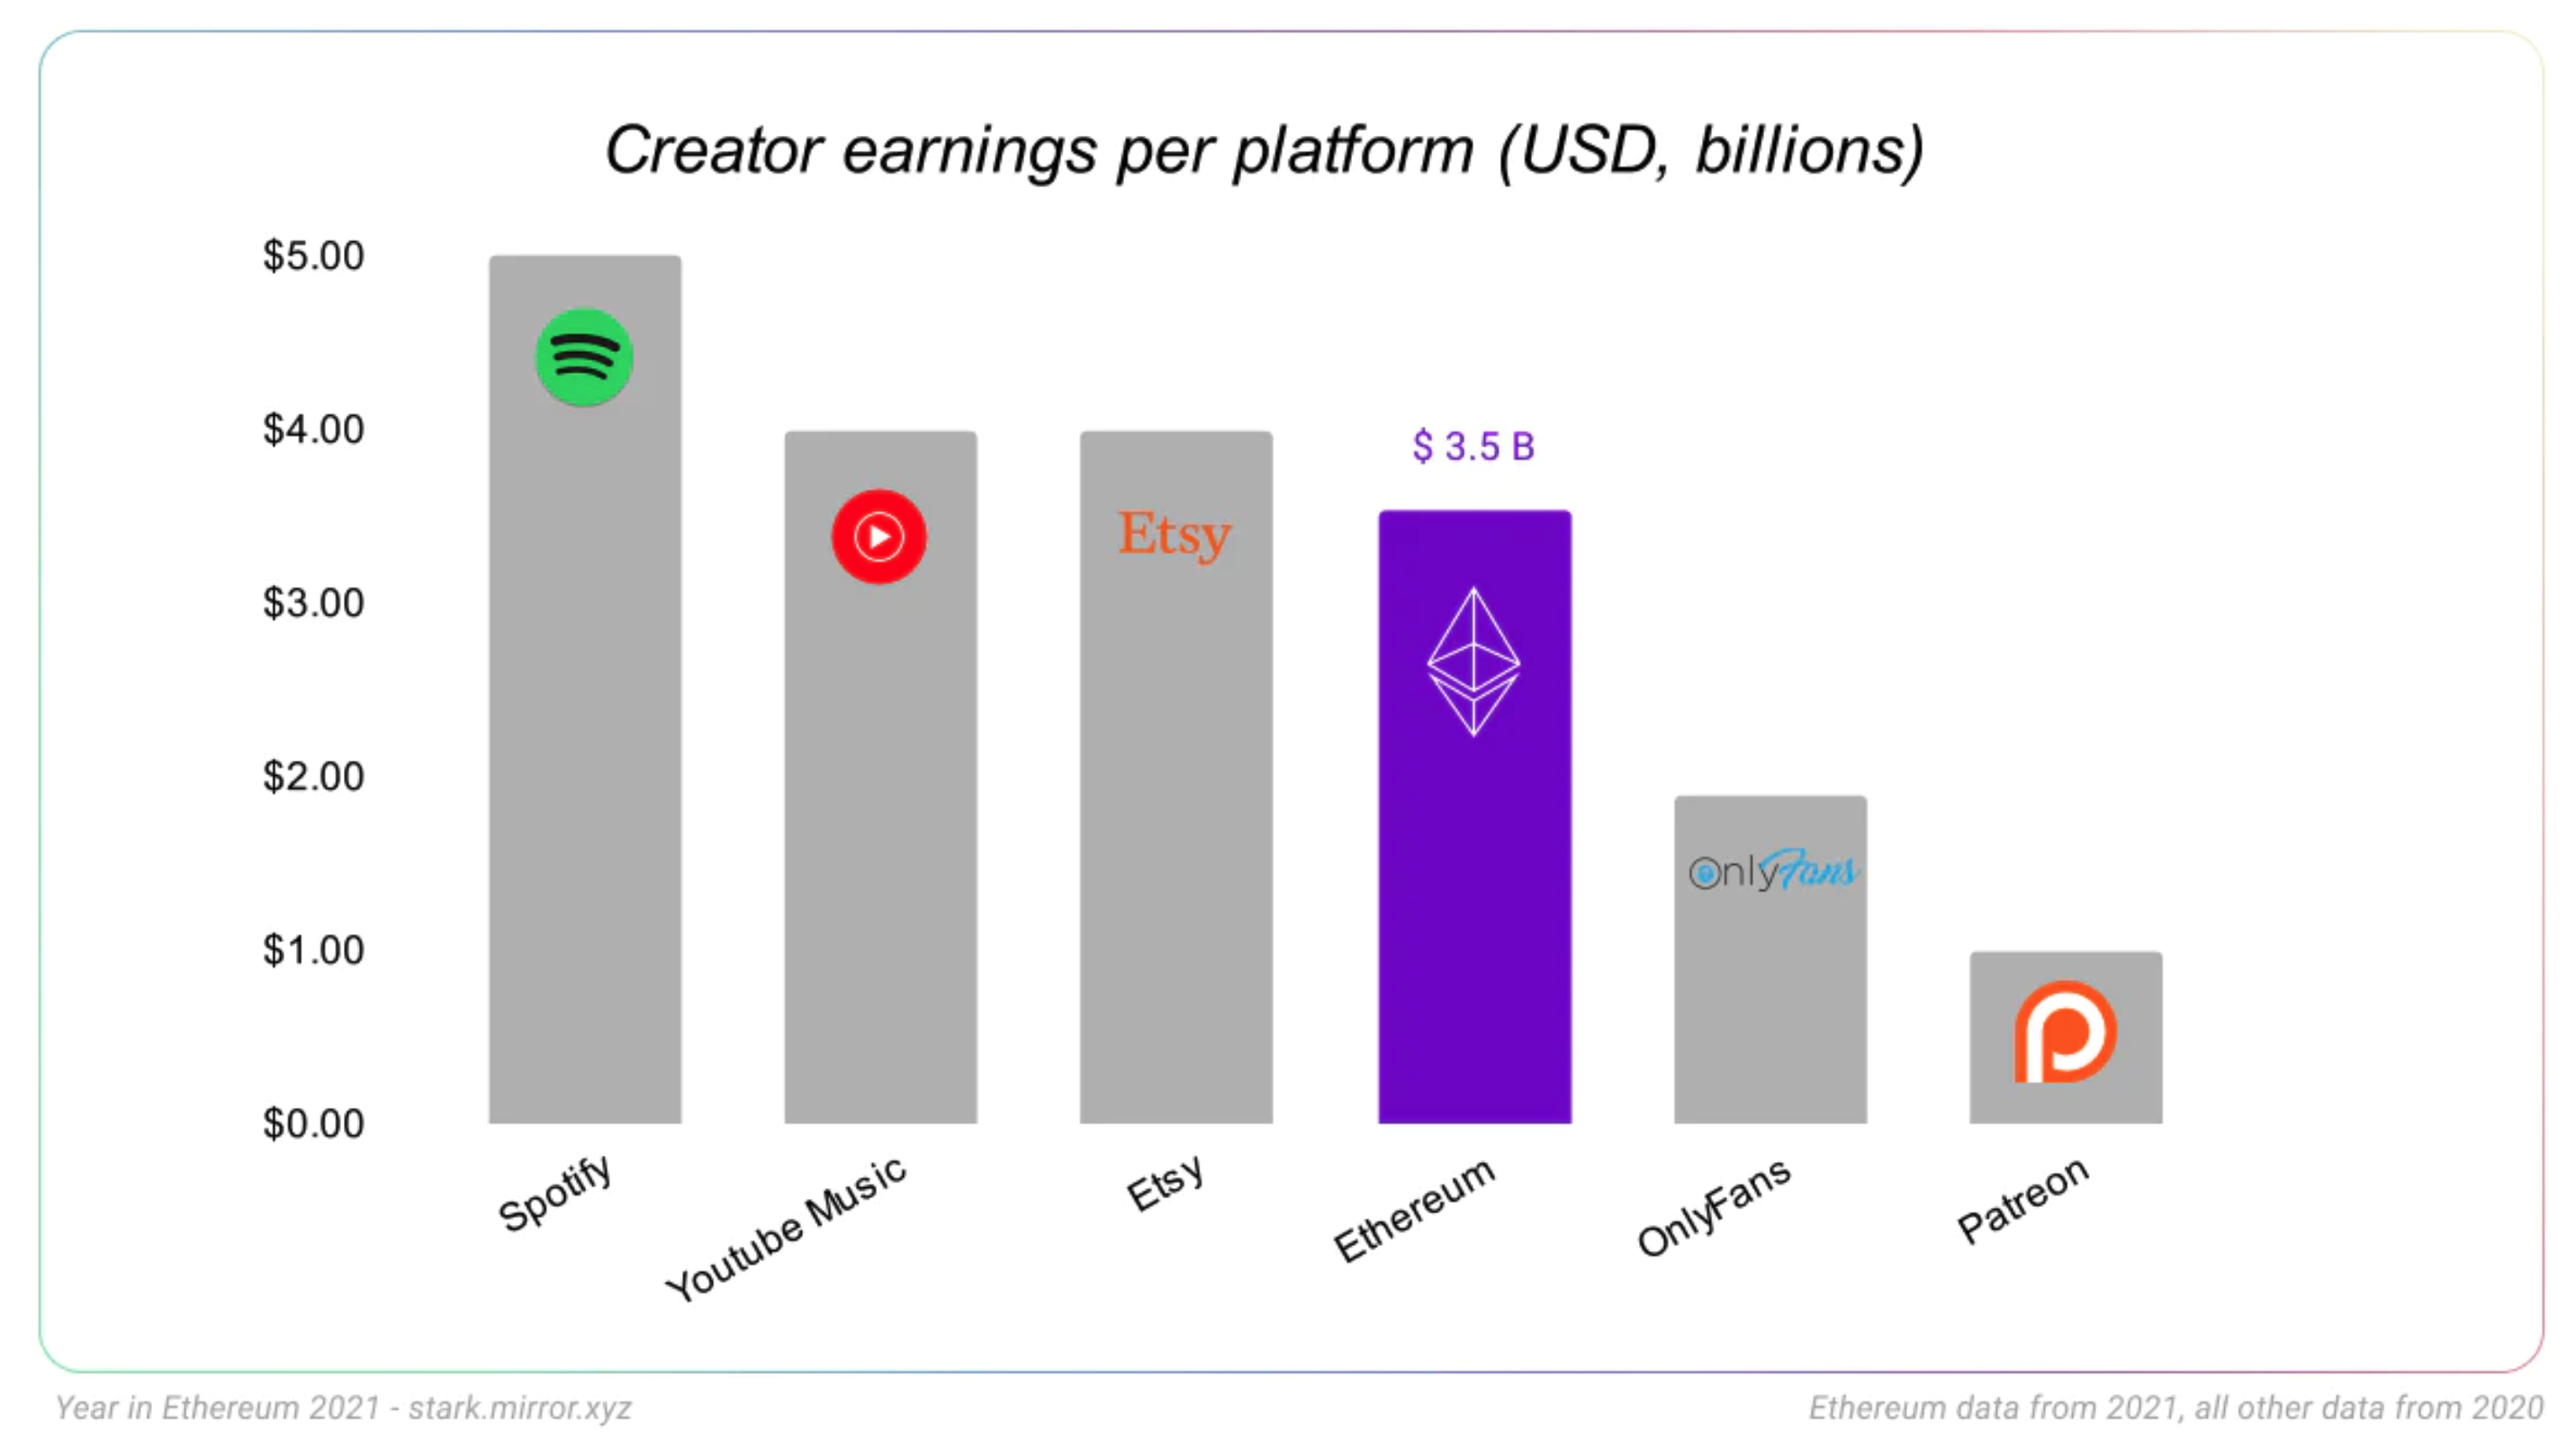 Creator earnings per platform